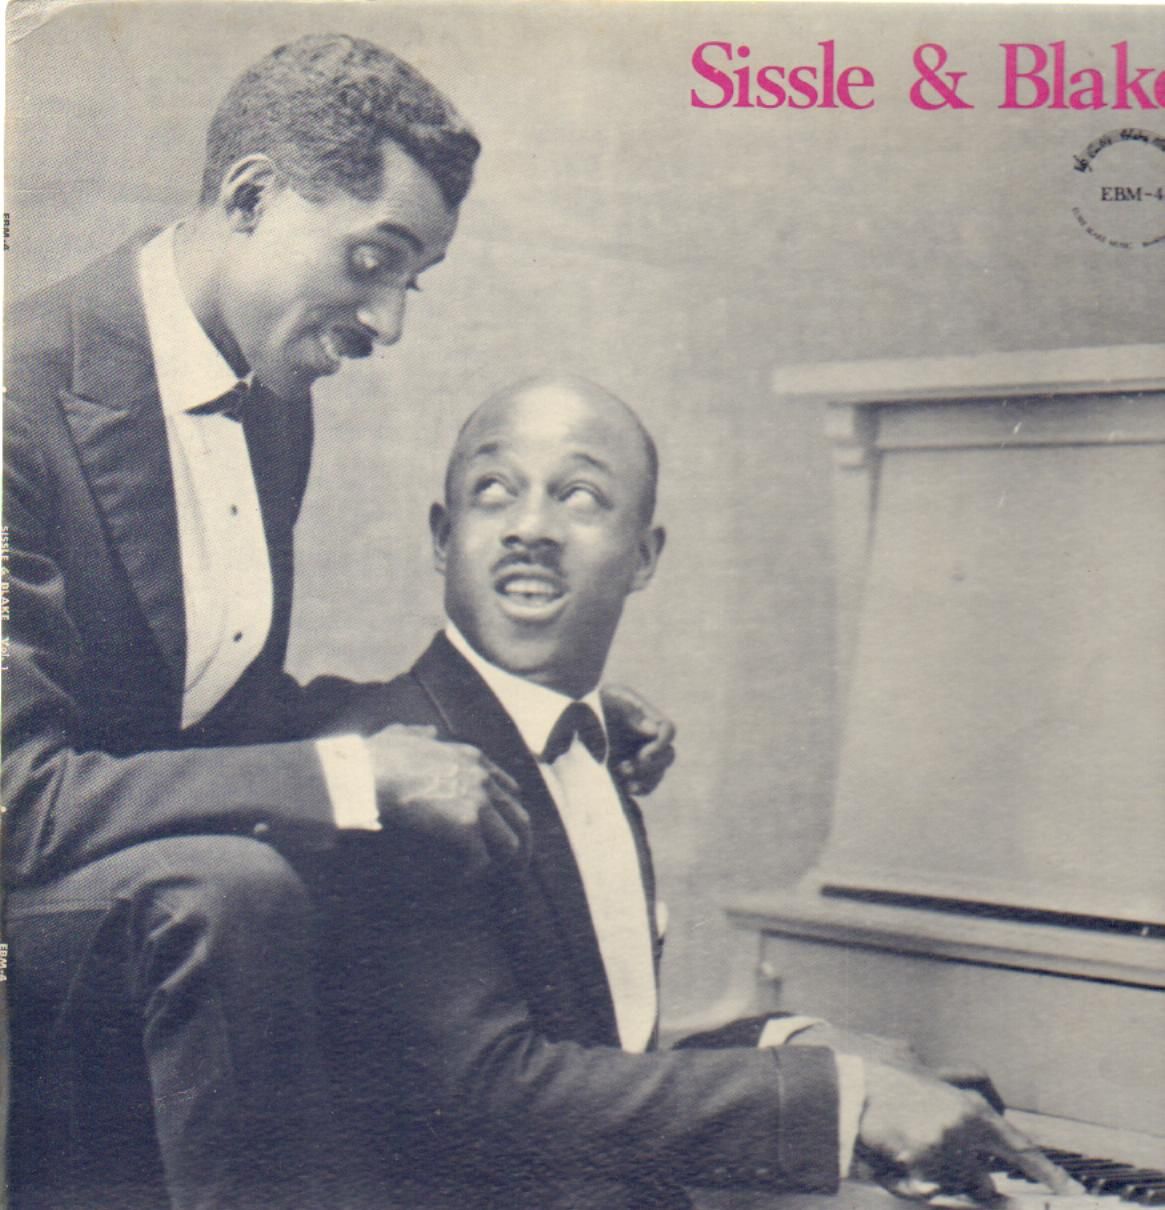 NOBLE SISSLE - Sissle & Blake cover 